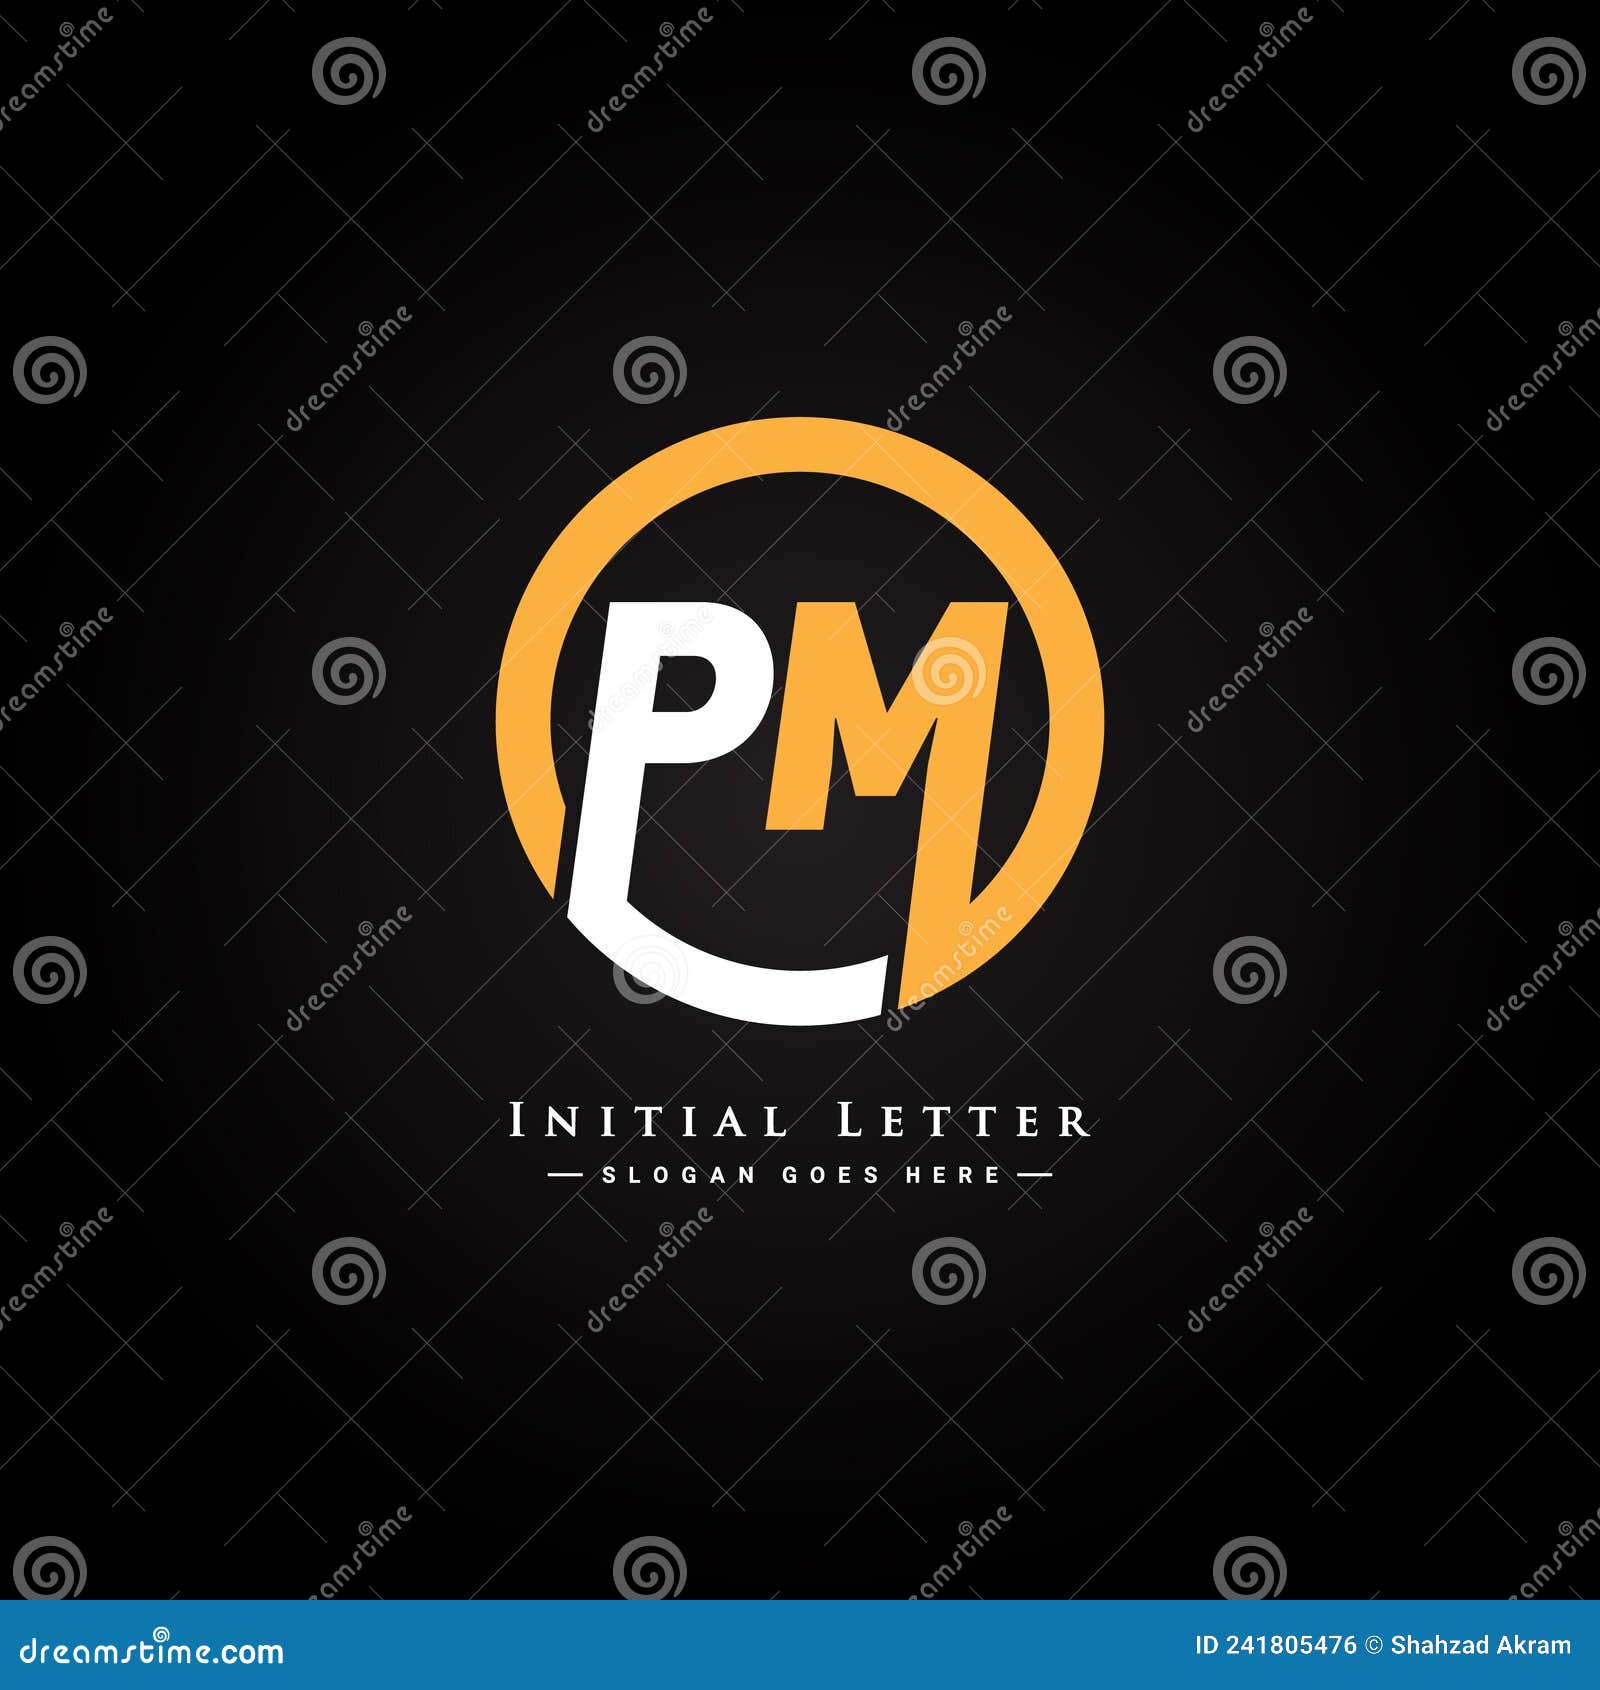 Premitha Manickam Music logo on Behance